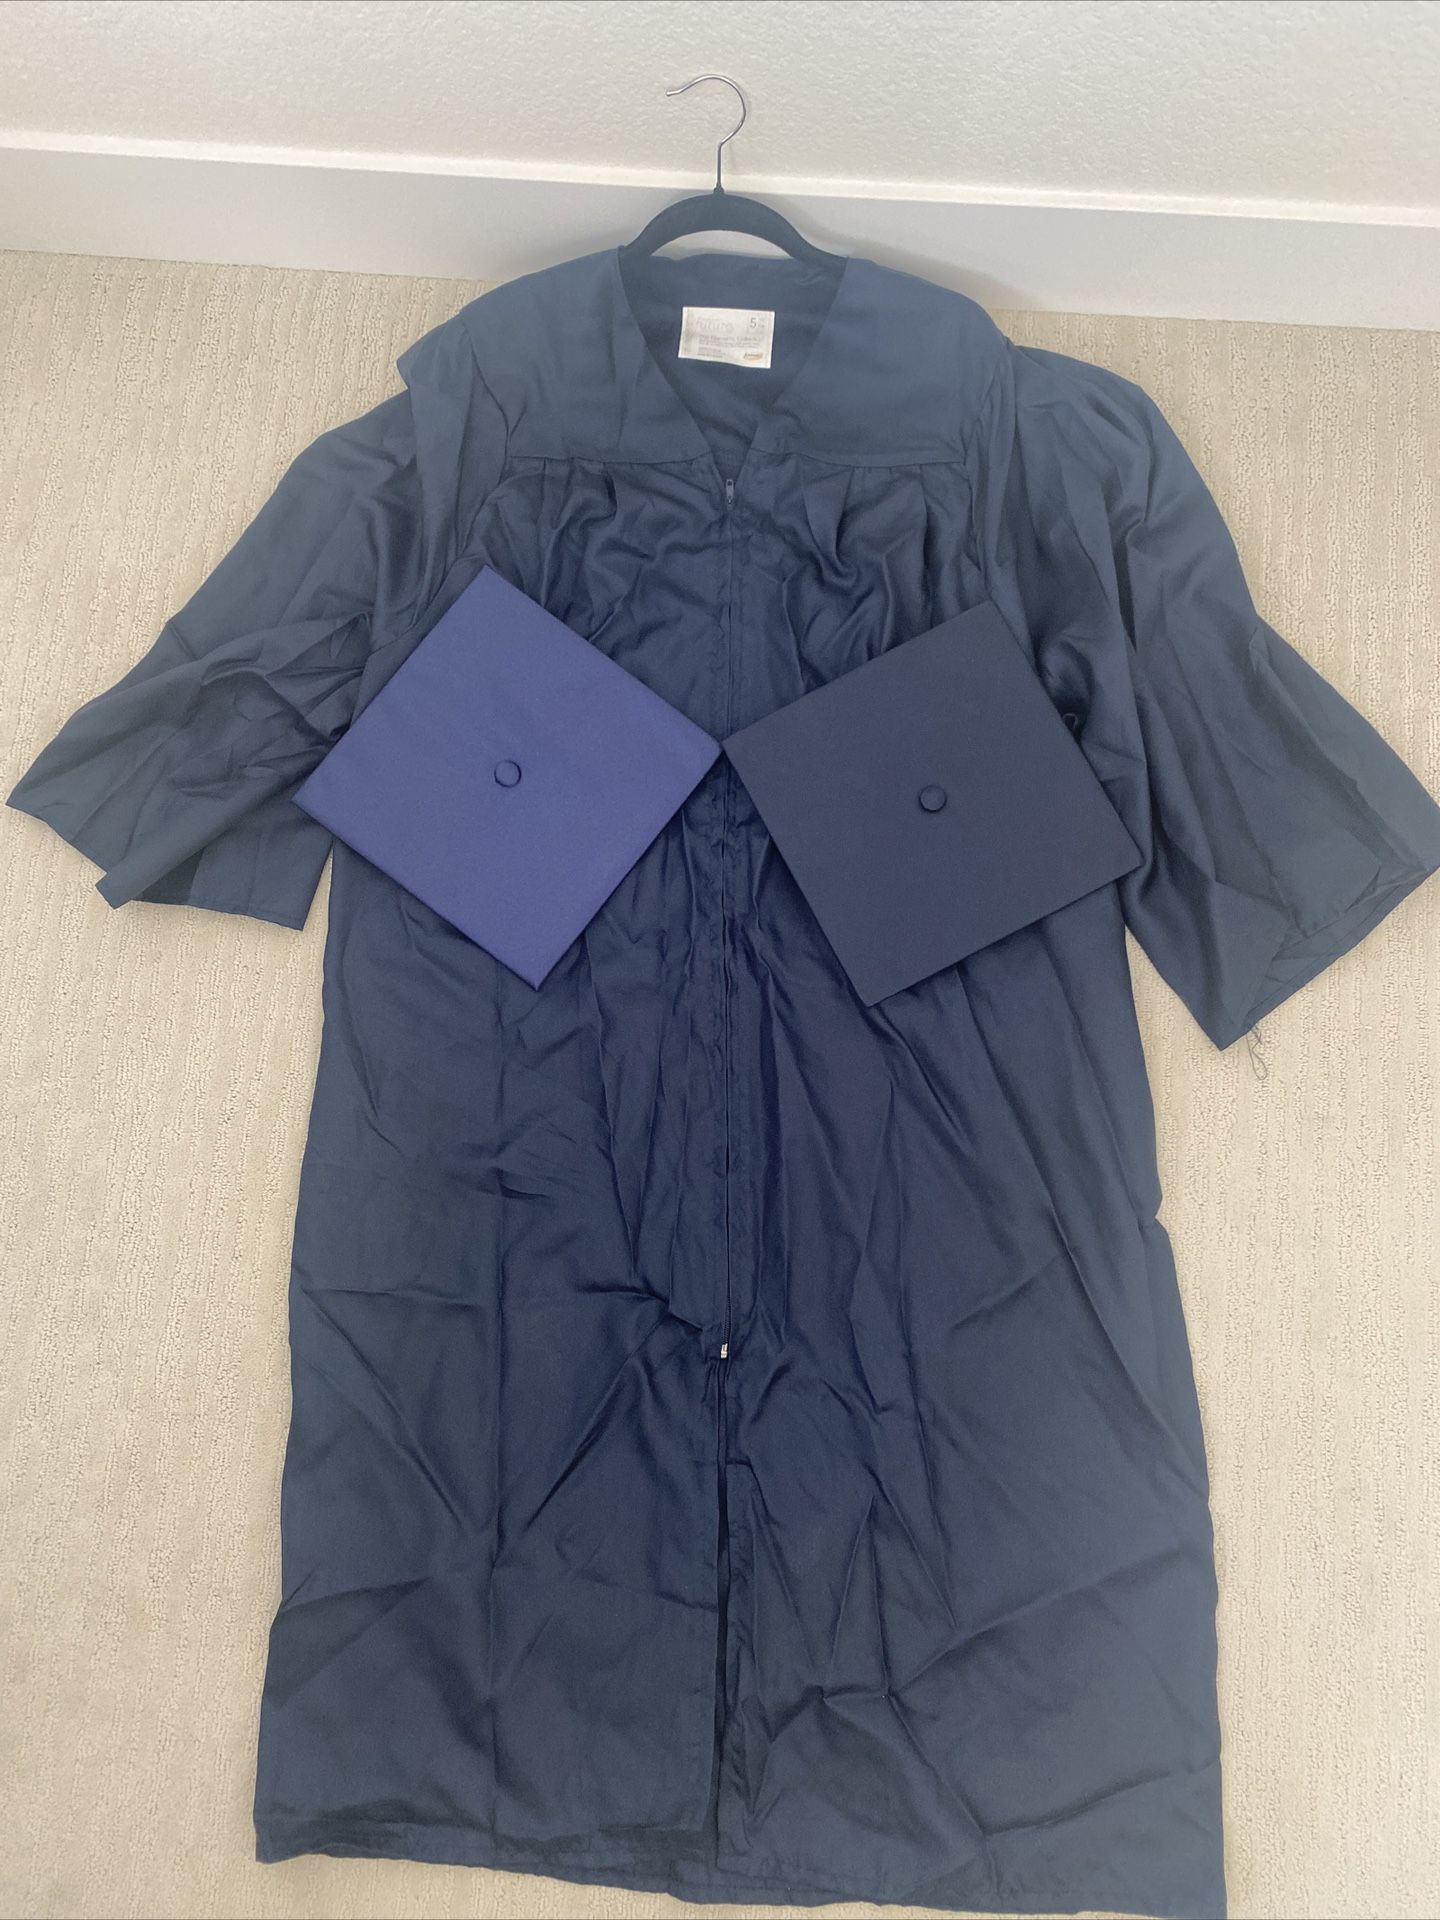 Jostens Graduation Gown - Navy Blue